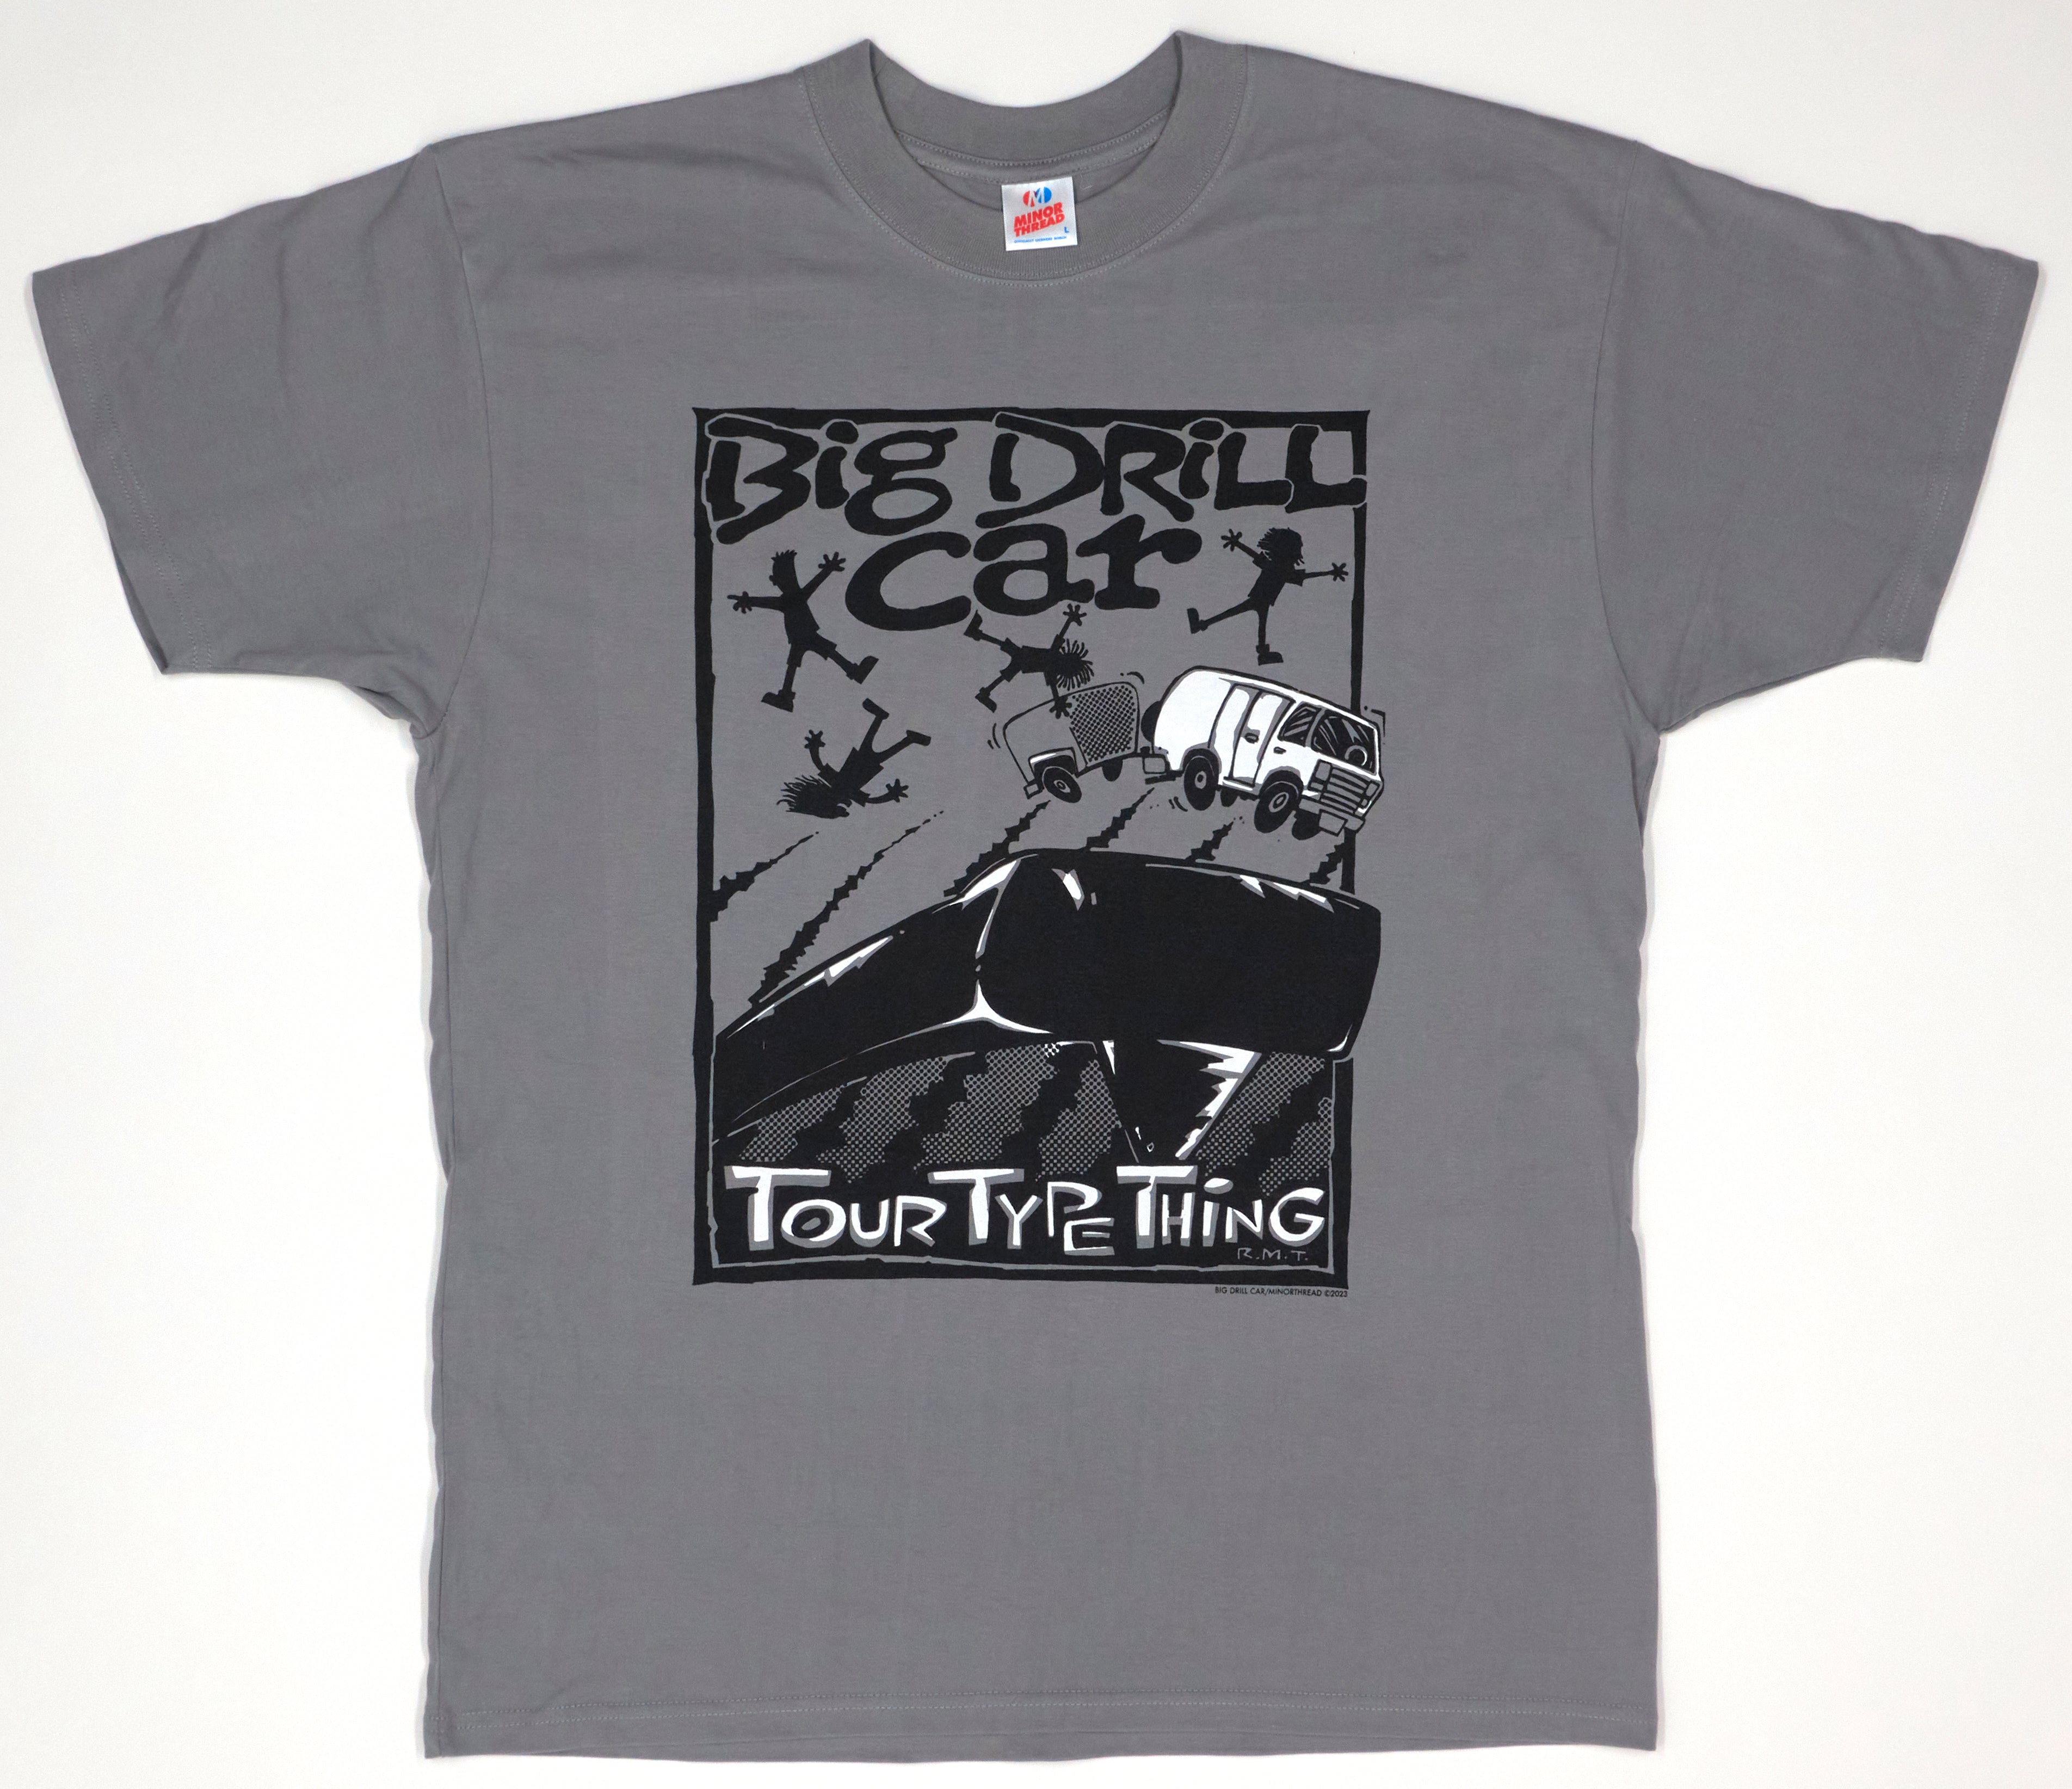 Big Drill Car X Minor Thread LTD - T-Shirt Type Thing Tour ©2023 Shirt